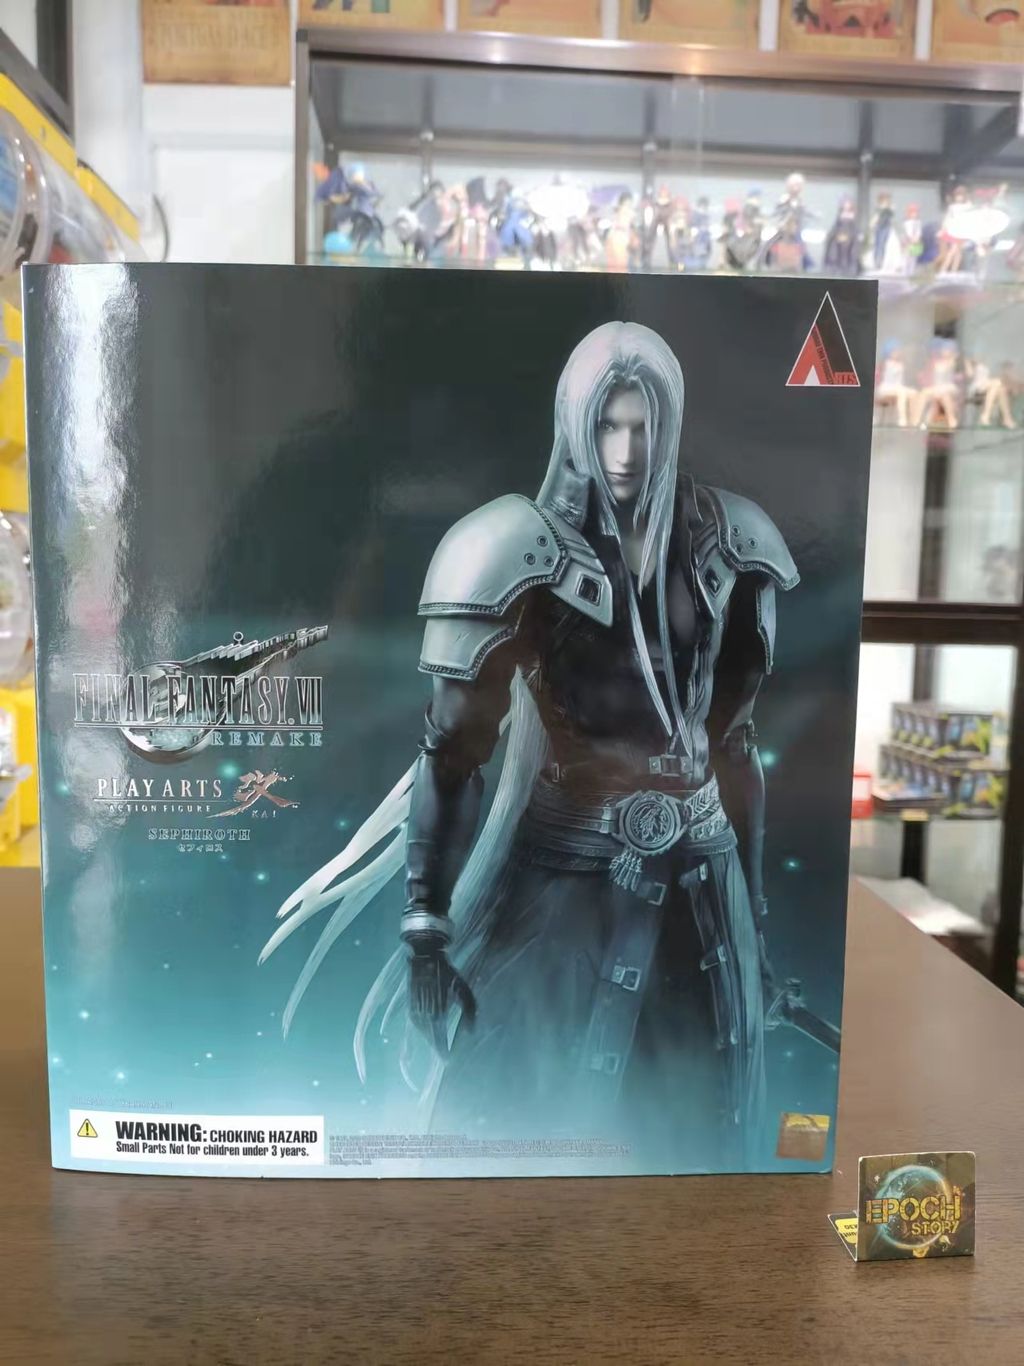 Final Fantasy VII Remake Play Arts Kai Sephiroth.jpg